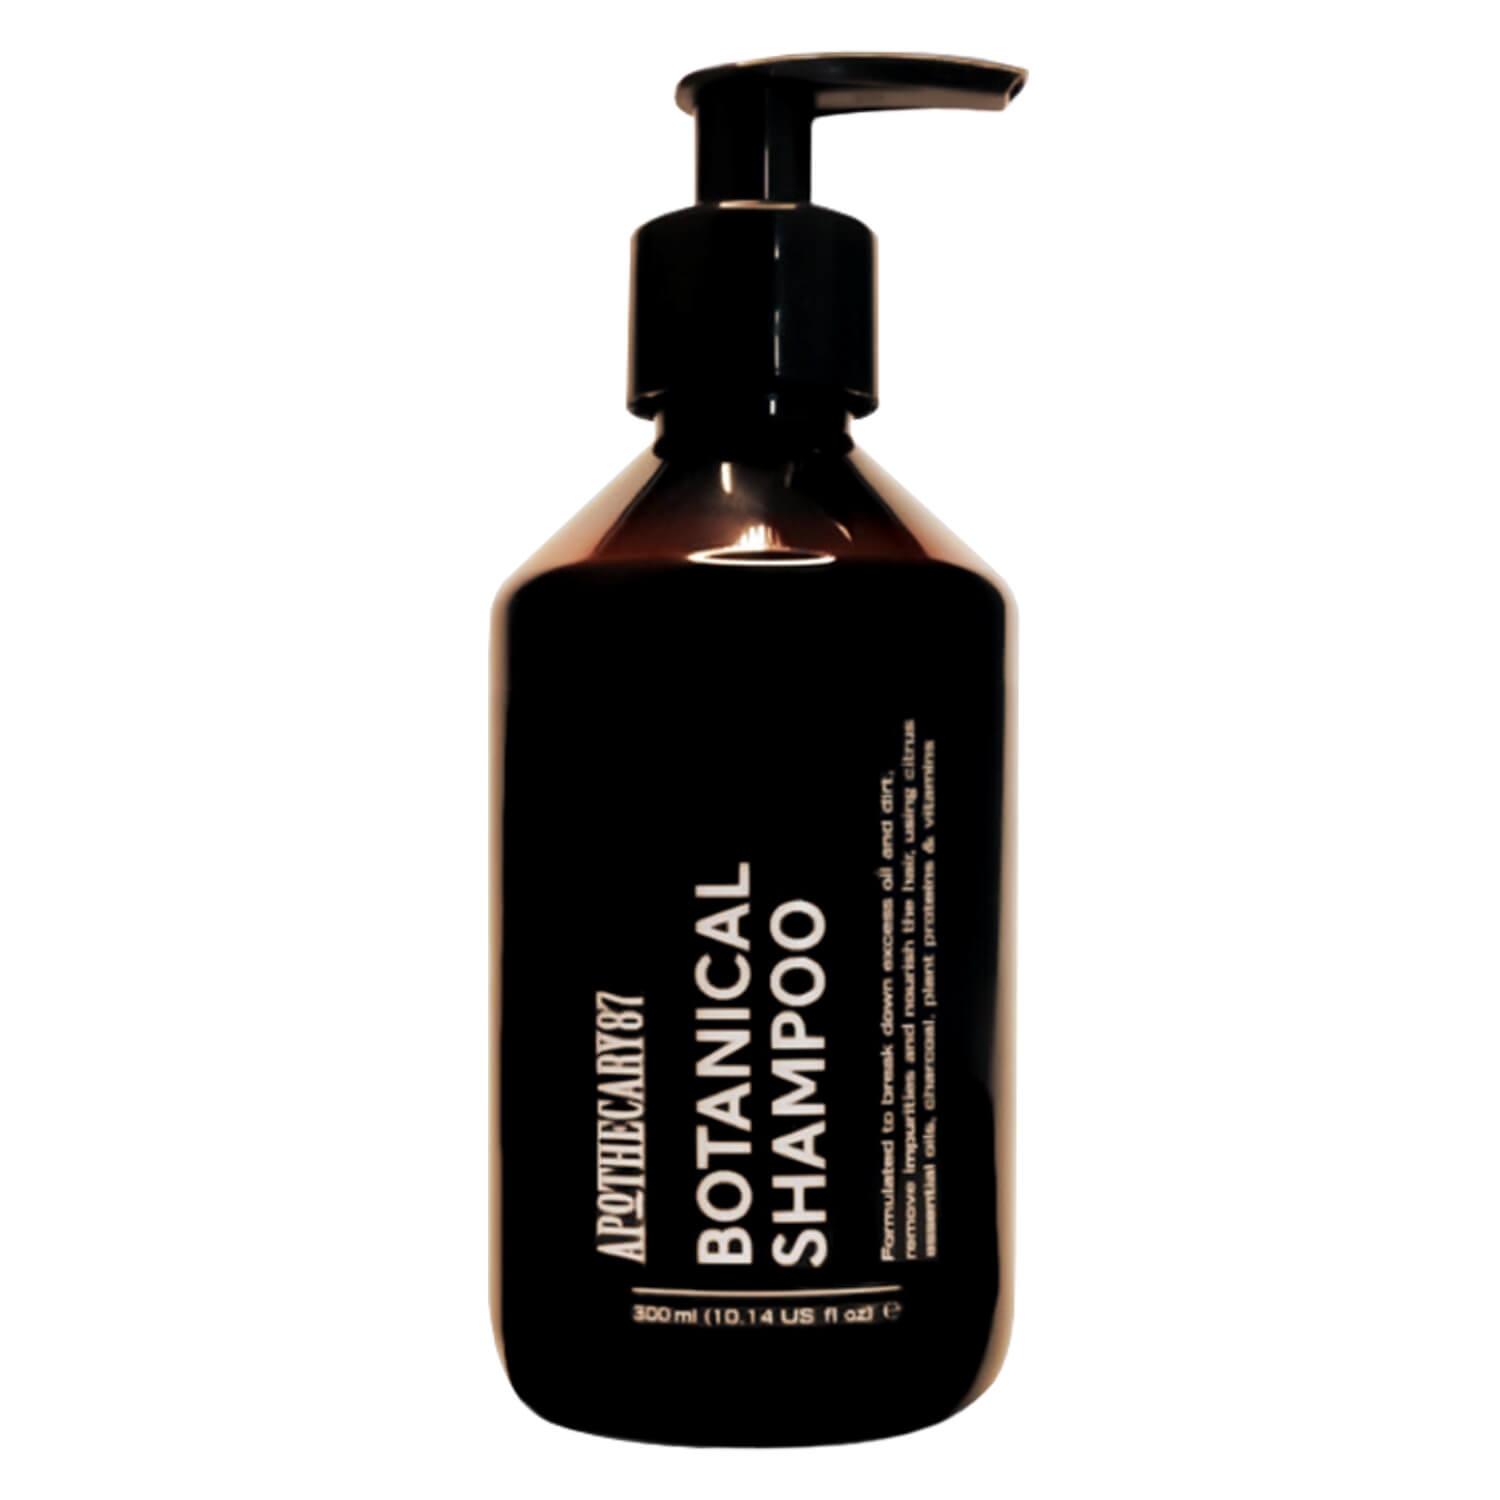 Produktbild von Apothecary87 Grooming - Botanical Shampoo